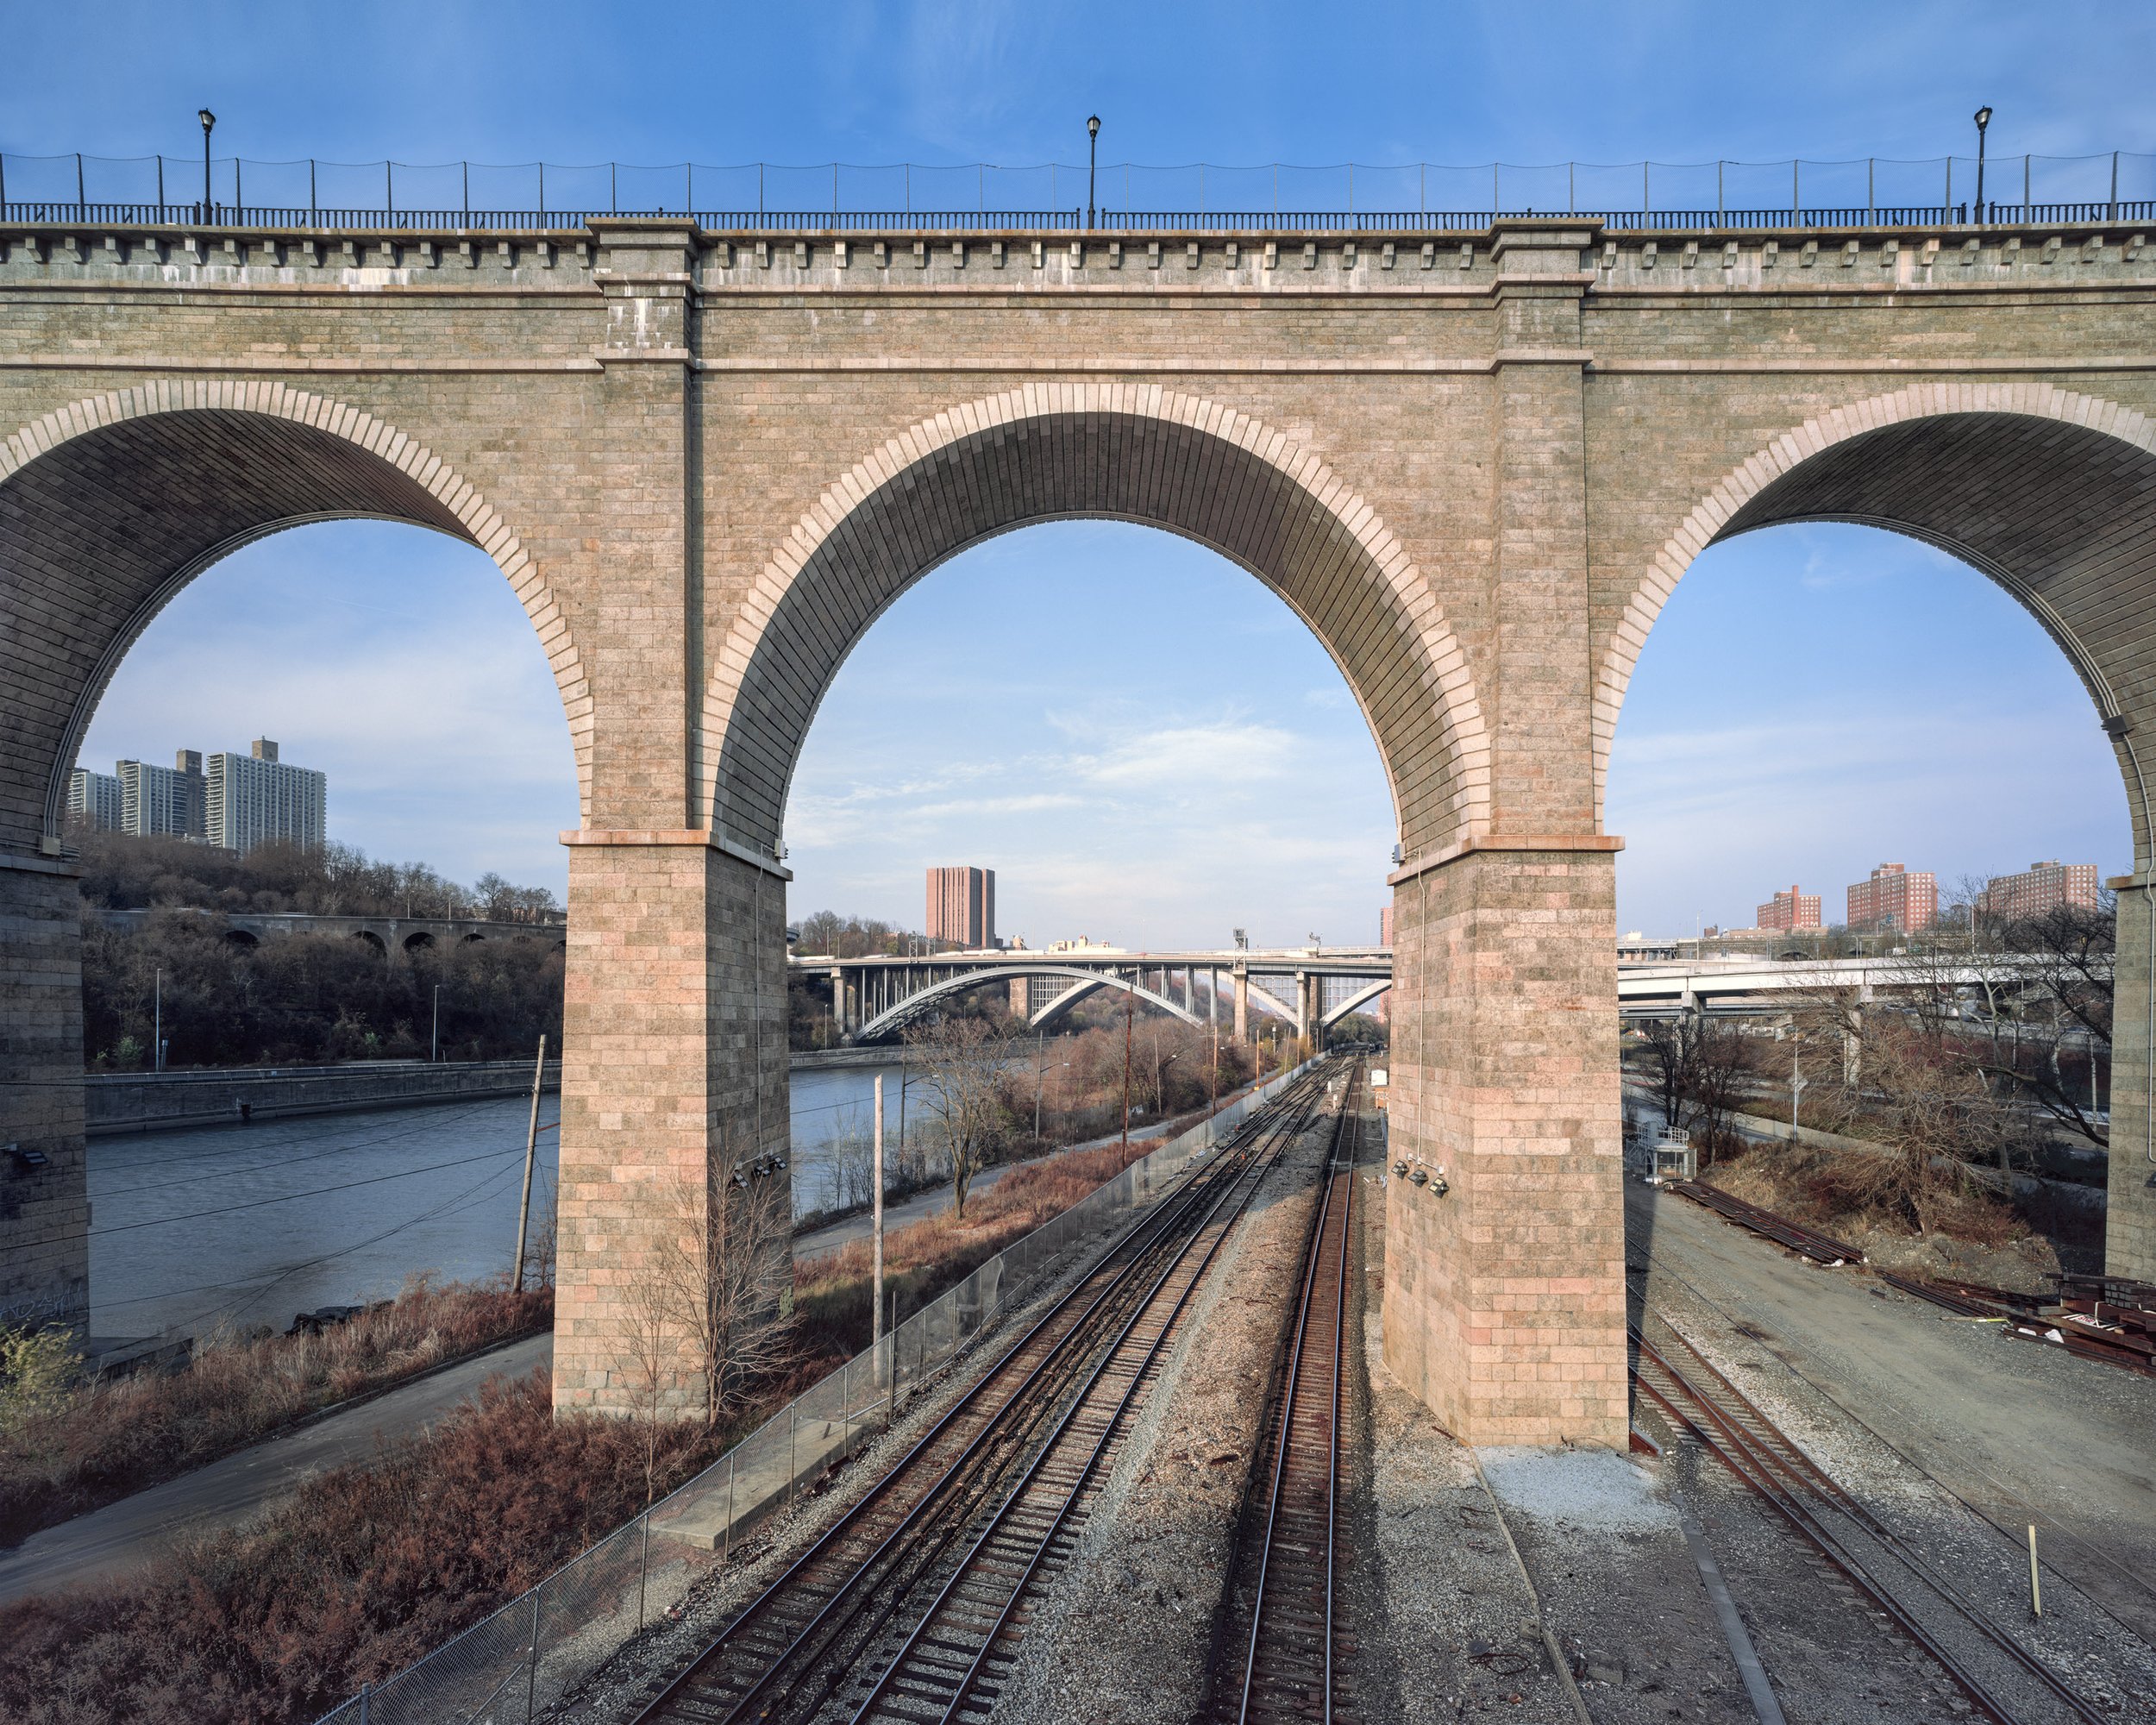 Highbridge and Tracks, Harlem River, New York City, John_Sanderson.jpg